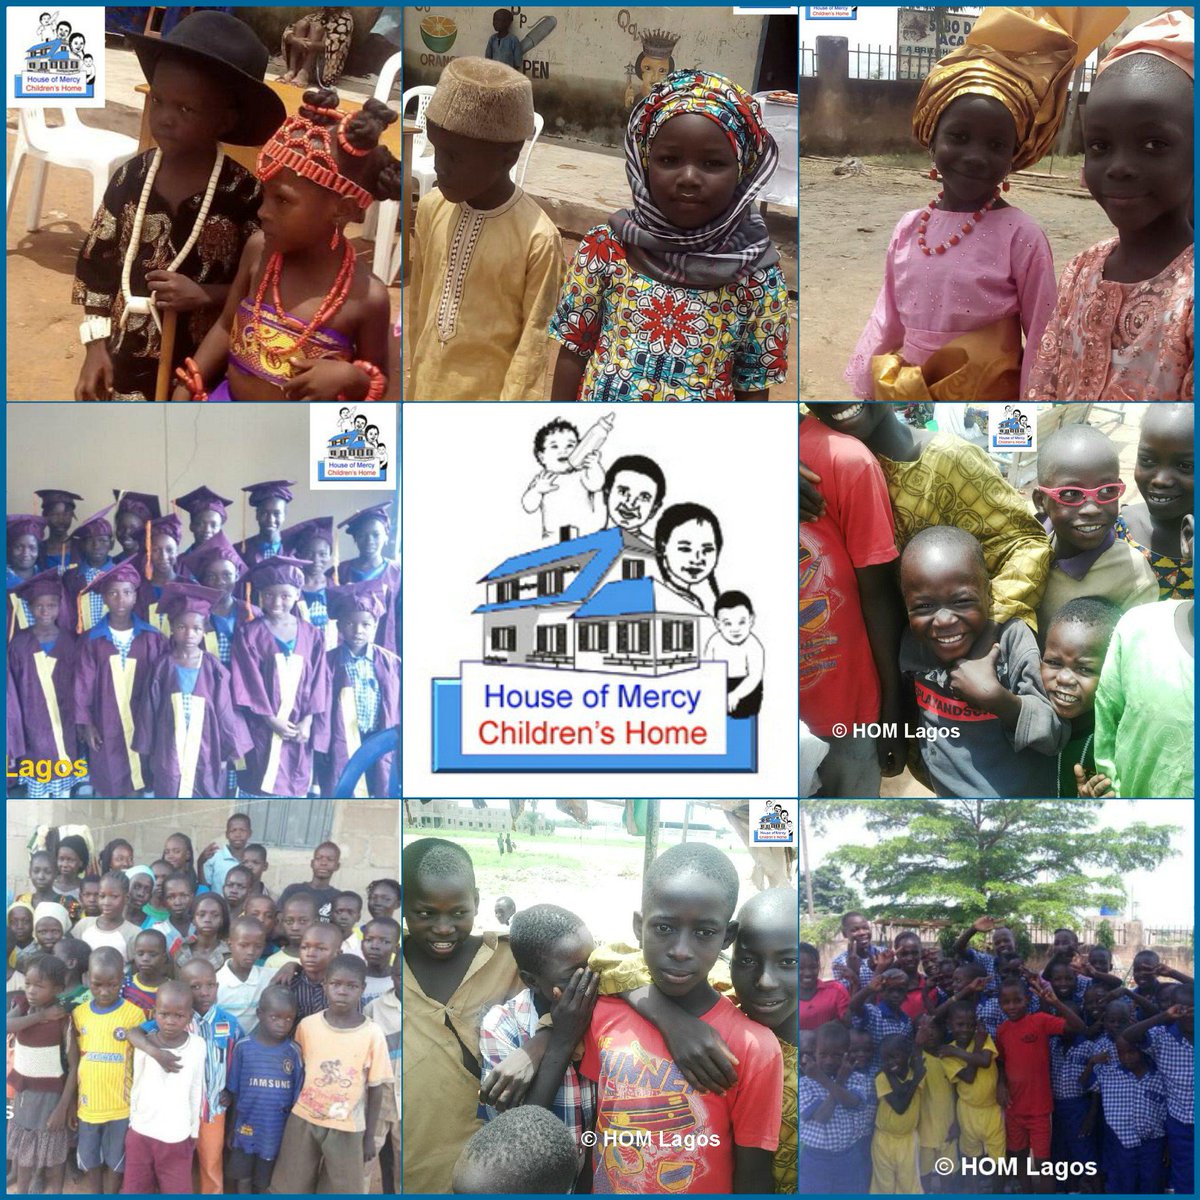 Children’s Day Nigeria - Journée de l’Enfant - El Día del Niño homchildrenshome.org
   
#ChildrensDay #Nigeria #Journeedelenfant #DíadelNiño